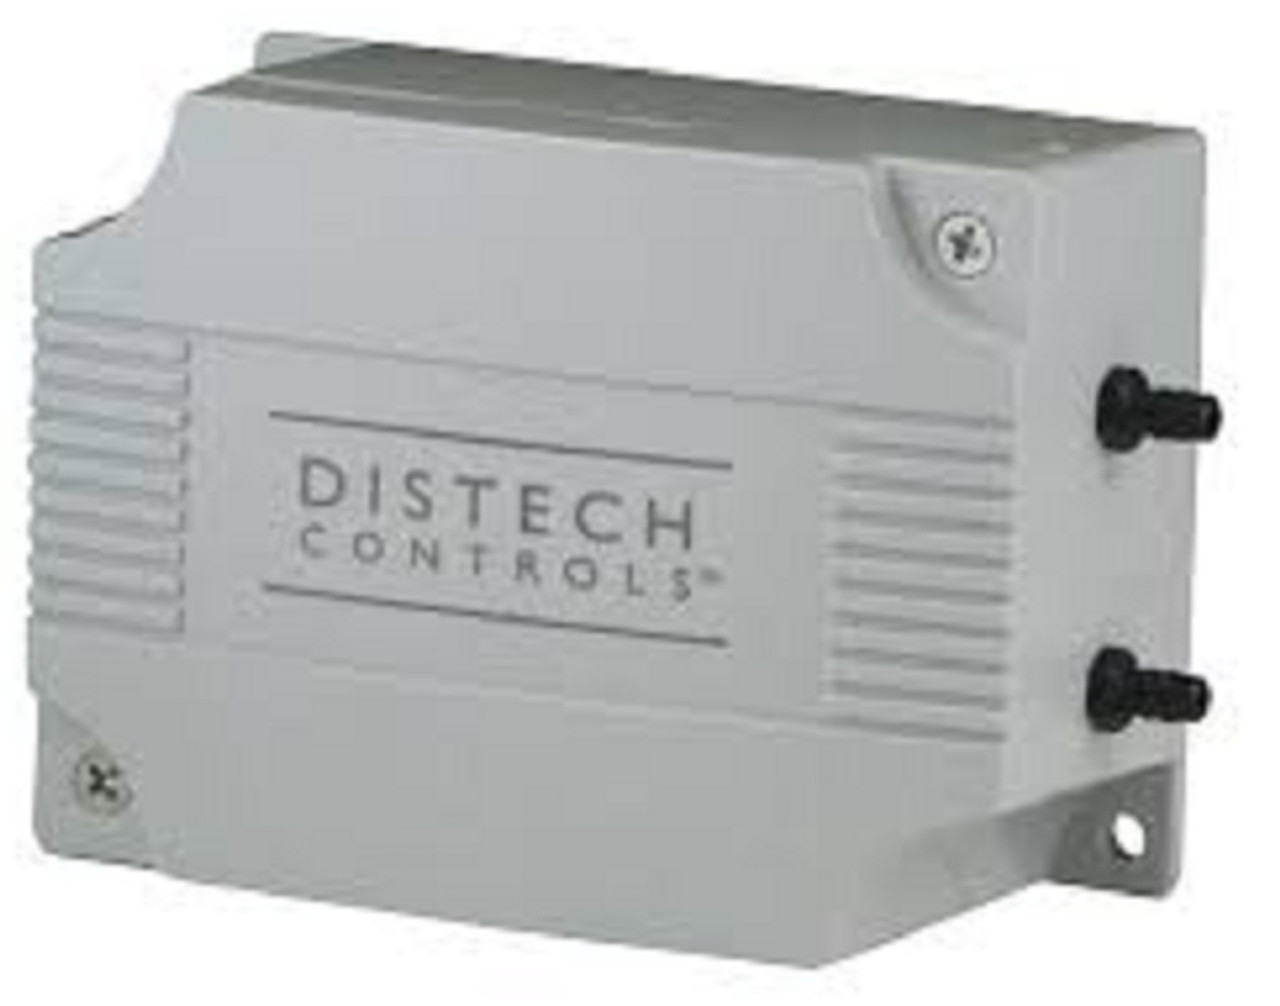 Distech PS-ADP08WCXP Duct Pressure Sensor, 24 VAC/DC, 6 Select Ranges, To 8" WC [New]